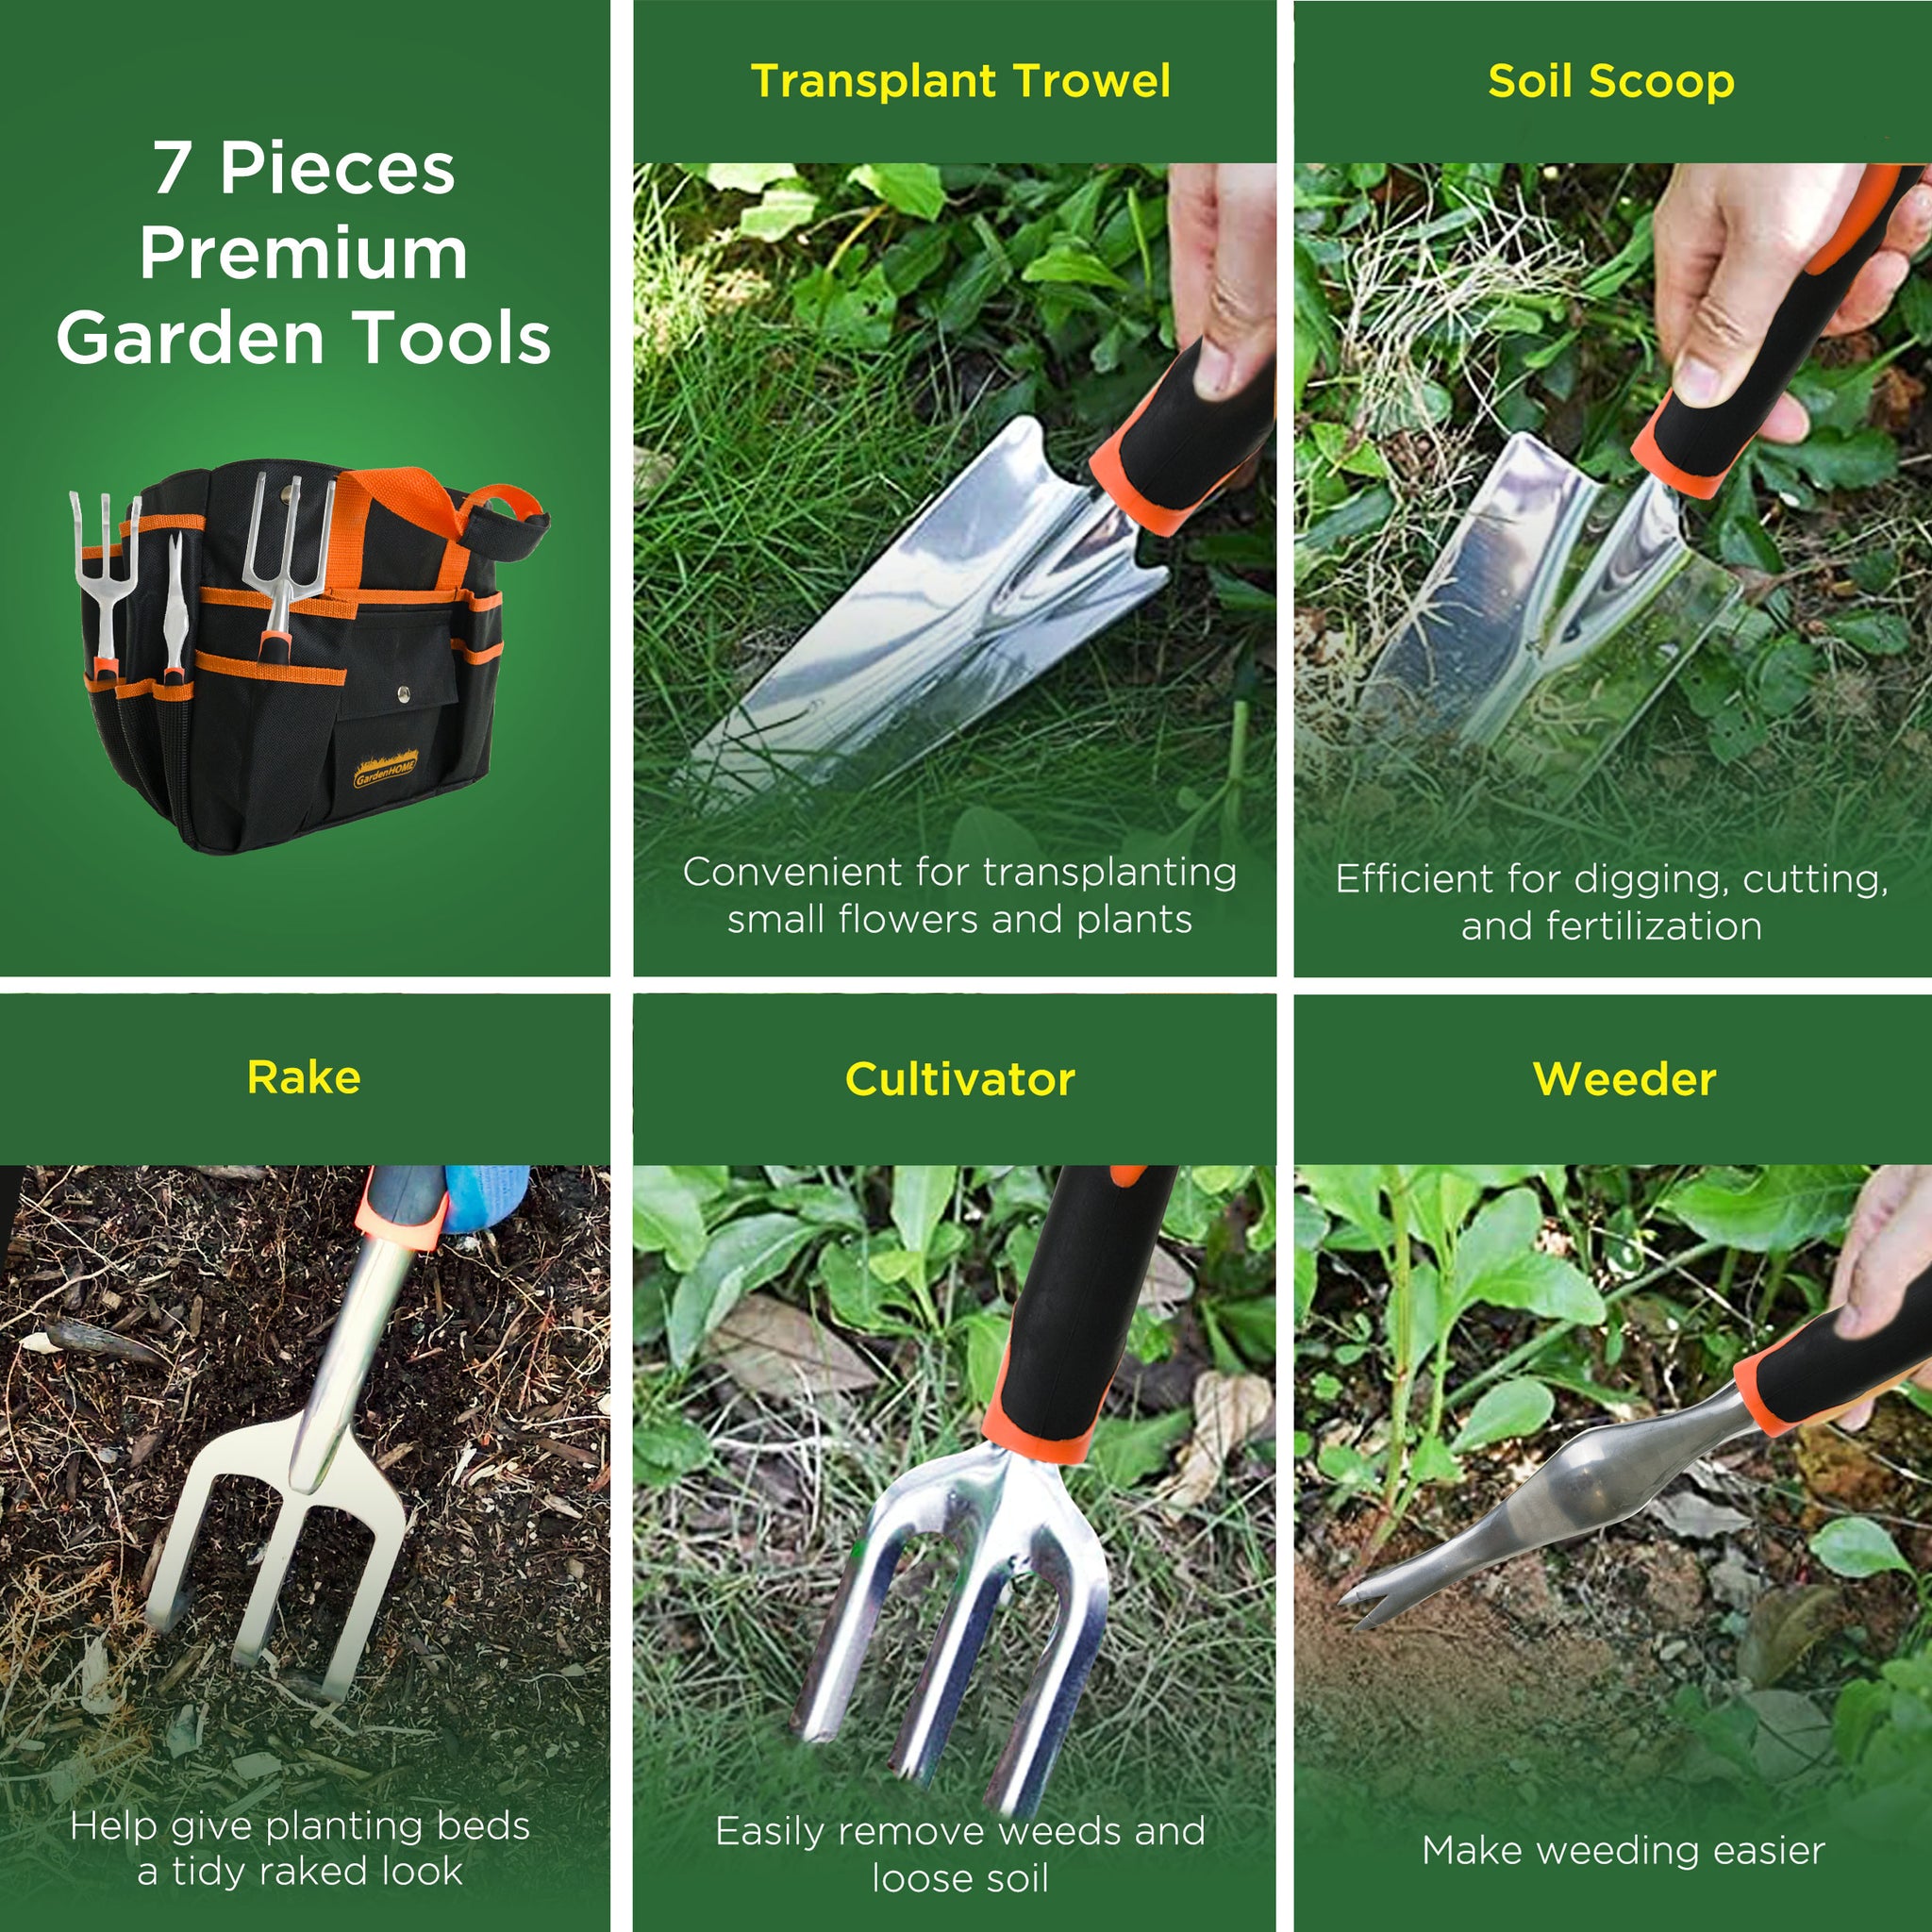 GardenHOME Garden Tool Set, Stainless Steel 7 Piece Tool Set, Heavy Duty Folding Stool, Detachable Canvas Tote Bag, Gardening Tool Kit Organizer (Orange)